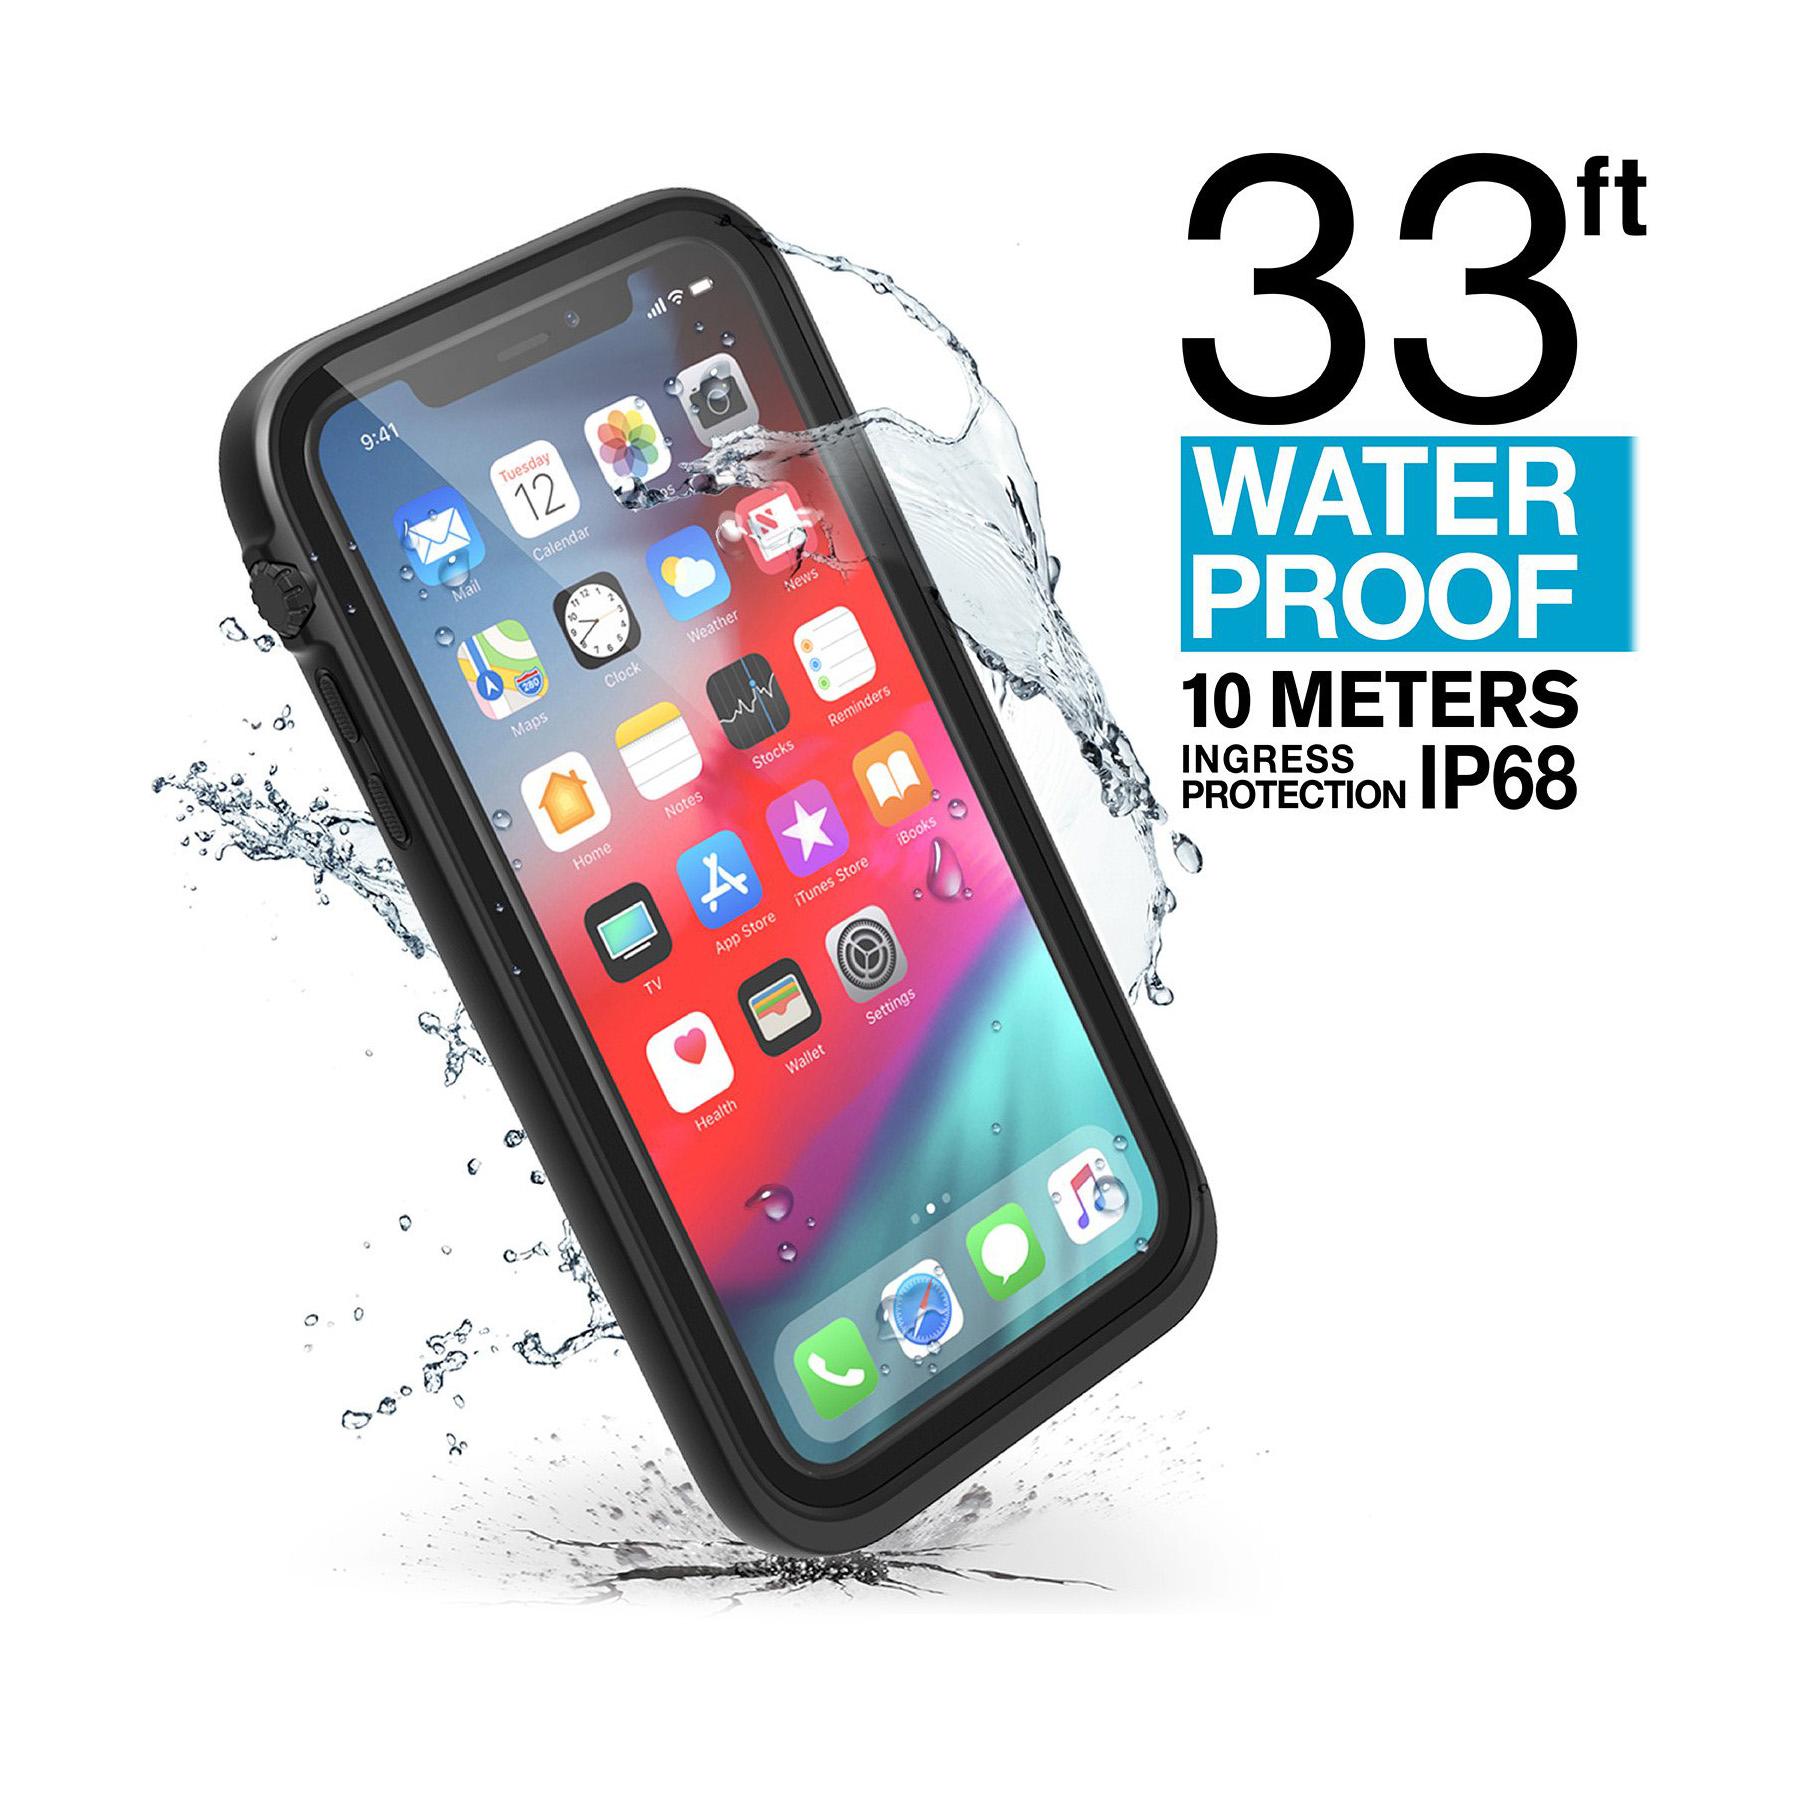 Catalyst Waterproof iPhone XR Case - Stealth Black